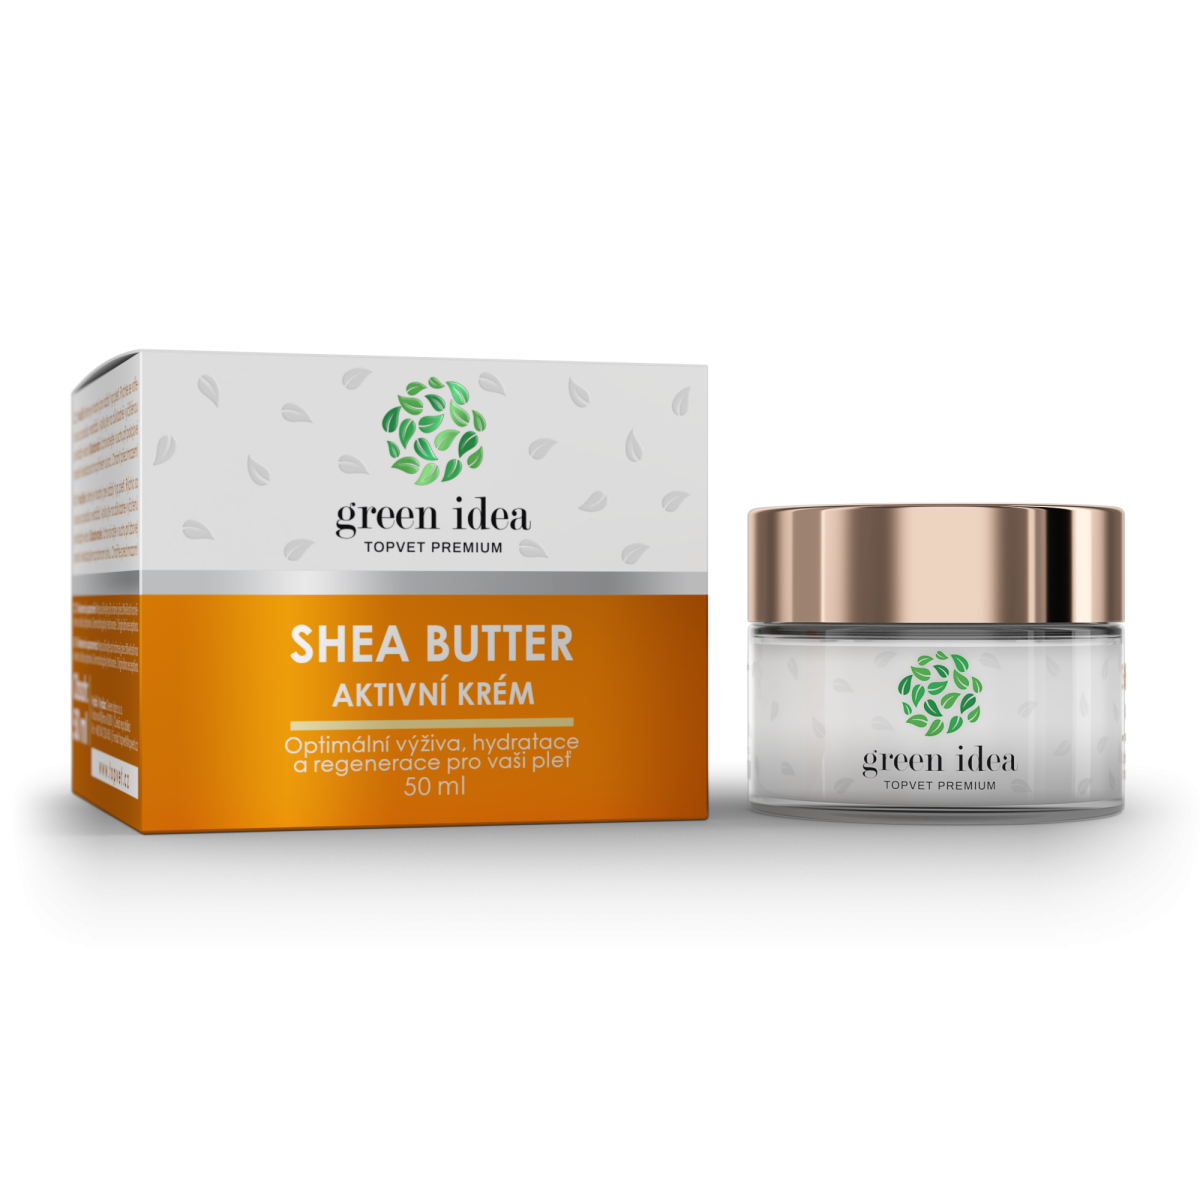 Shea butter active cream